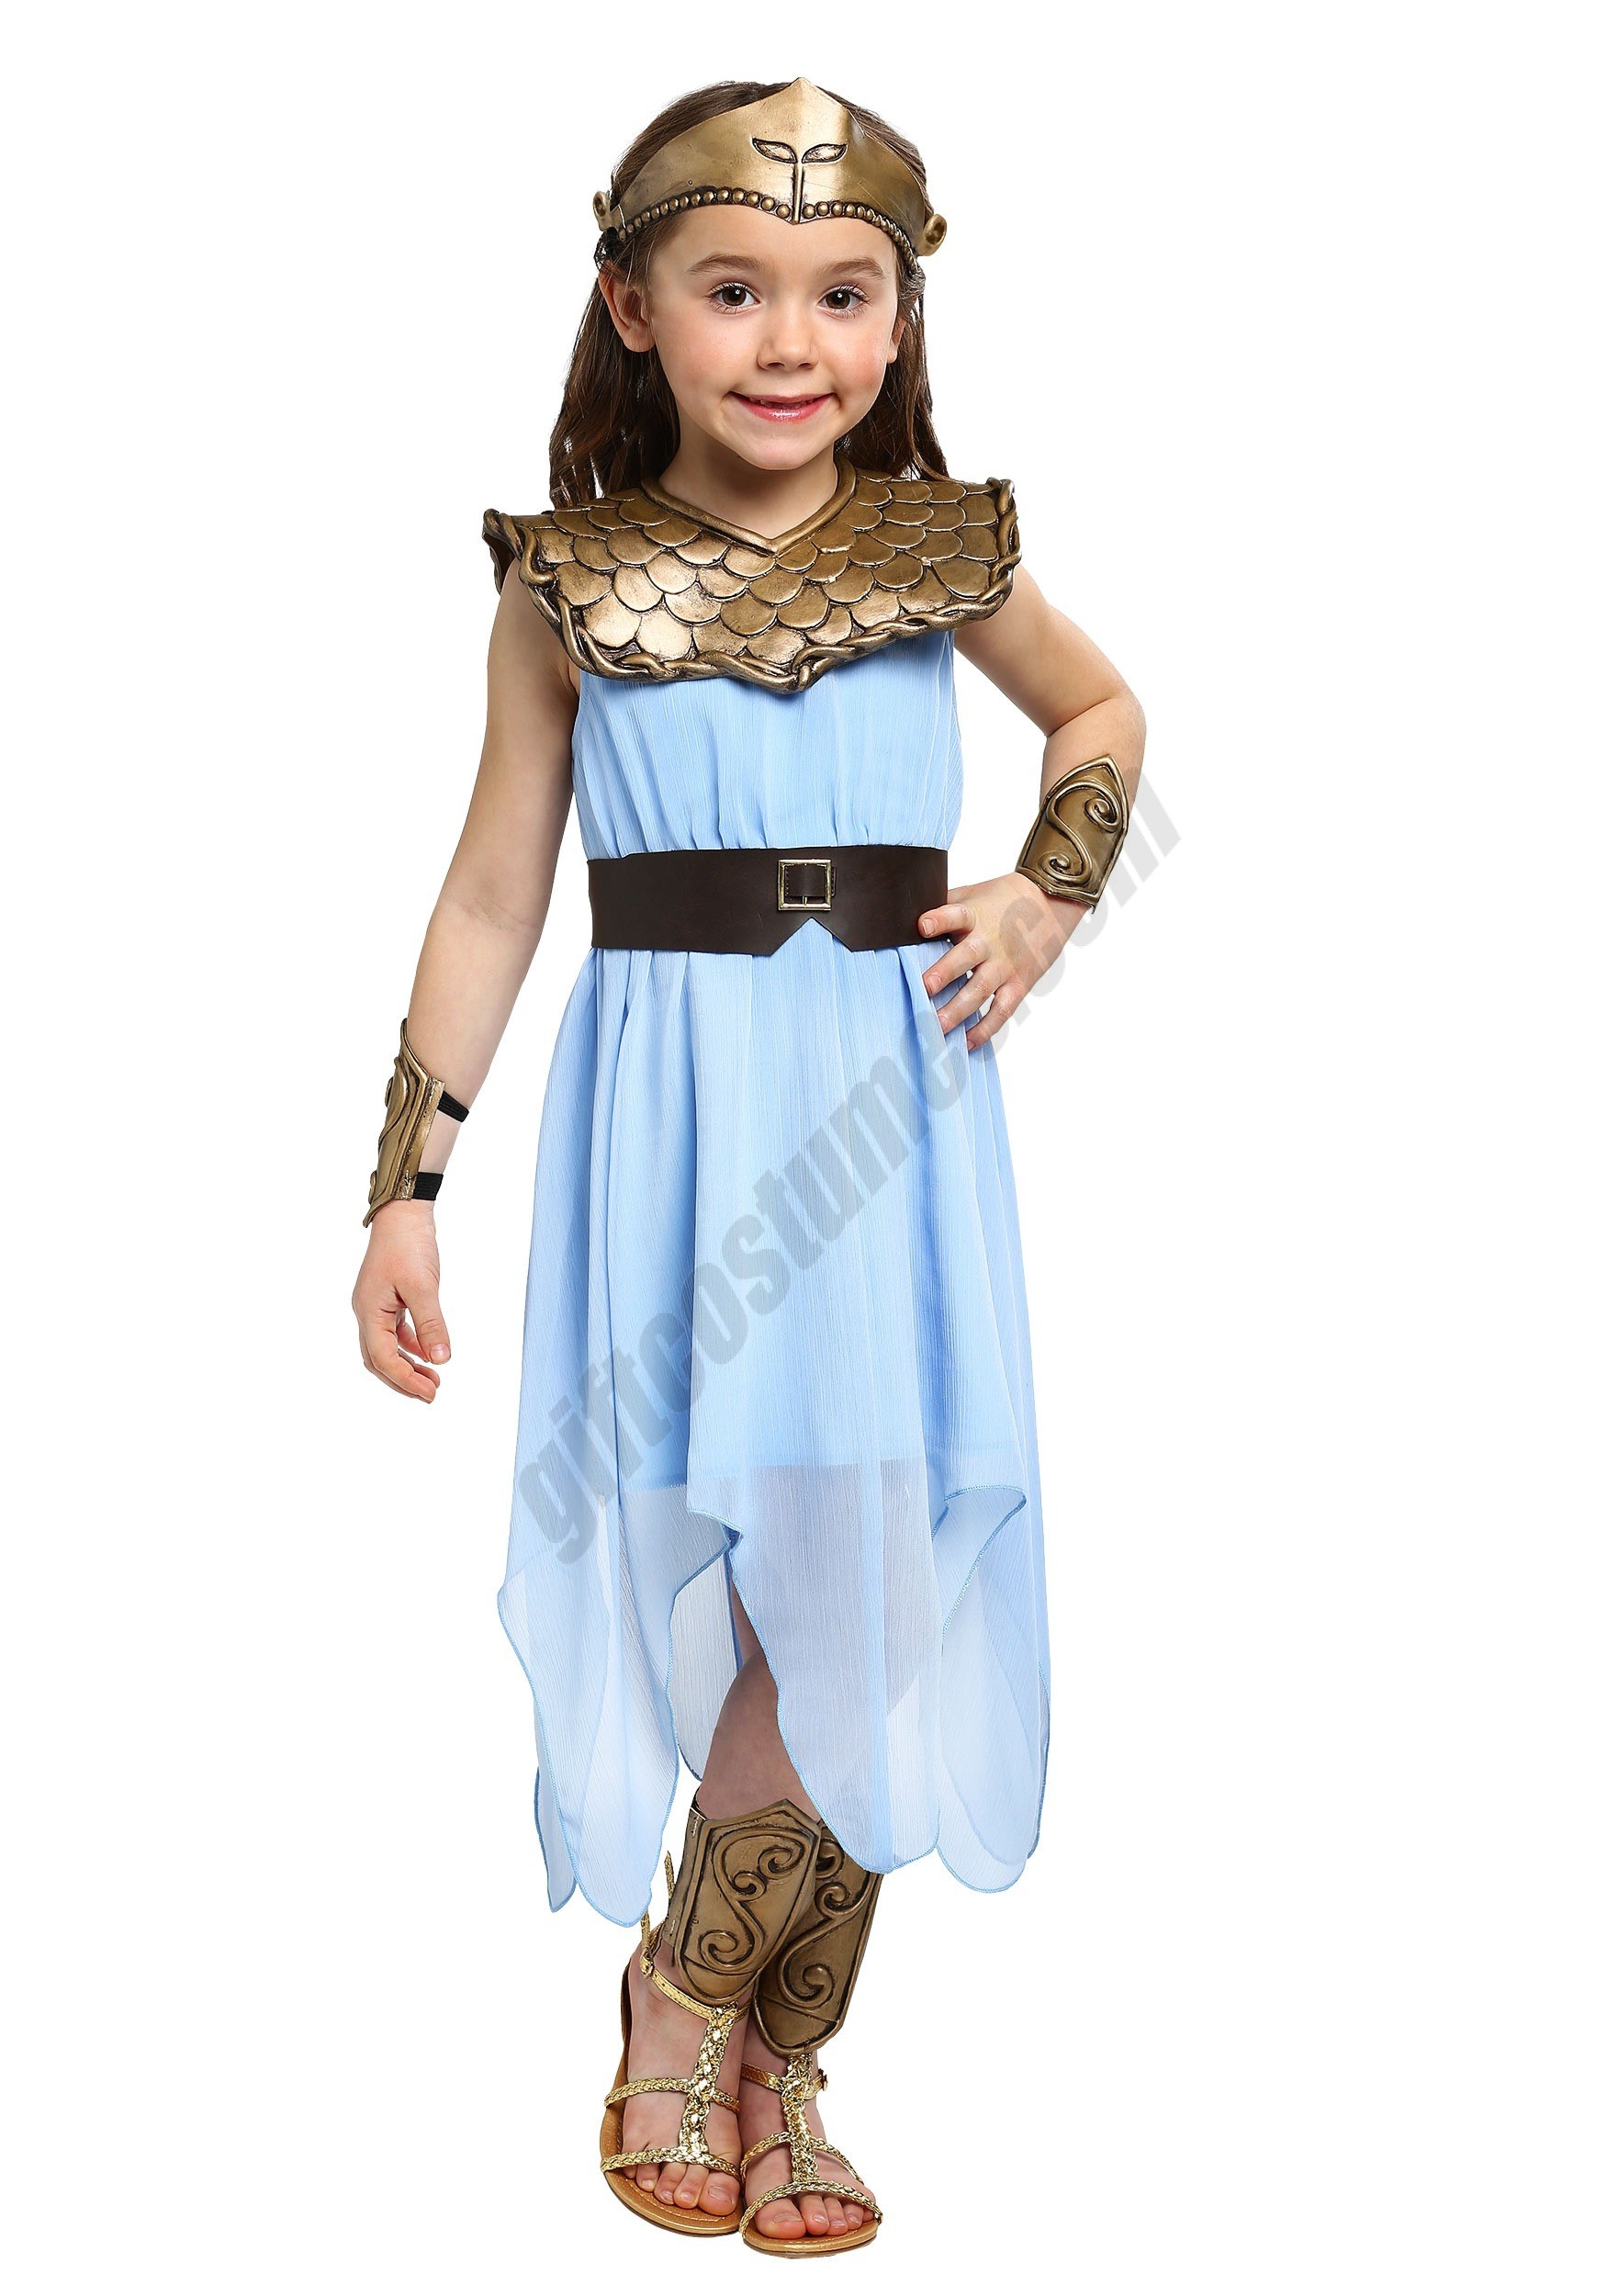 Toddler Girls' Athena Costume Promotions - Toddler Girls' Athena Costume Promotions